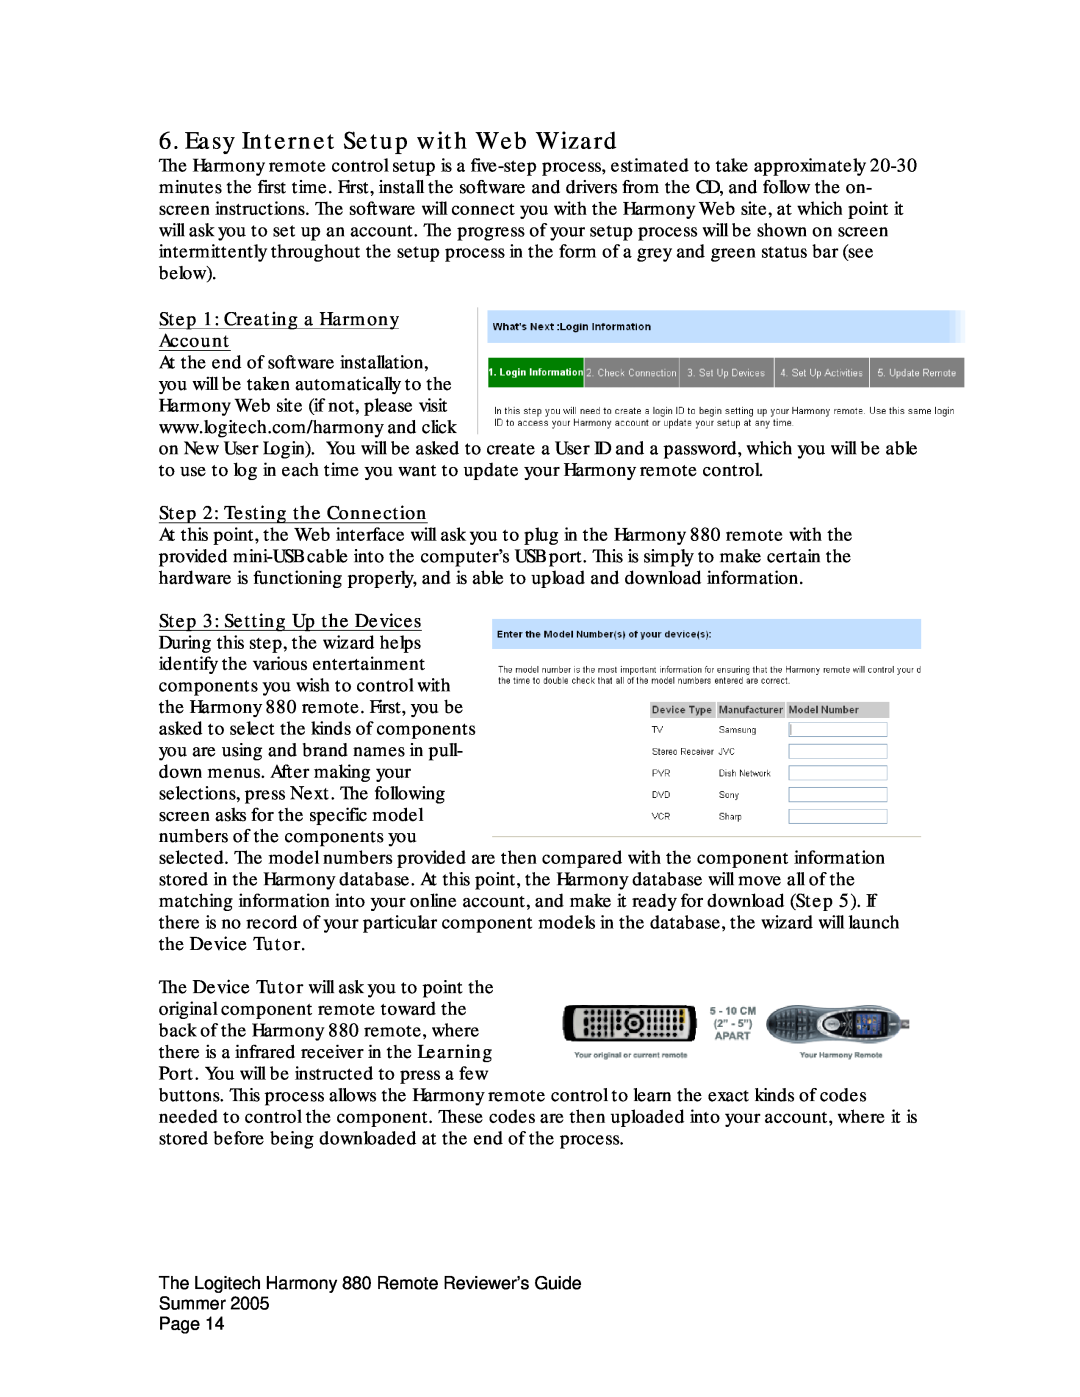 Logitech 880 manual Easy Internet Setup with Web Wizard 